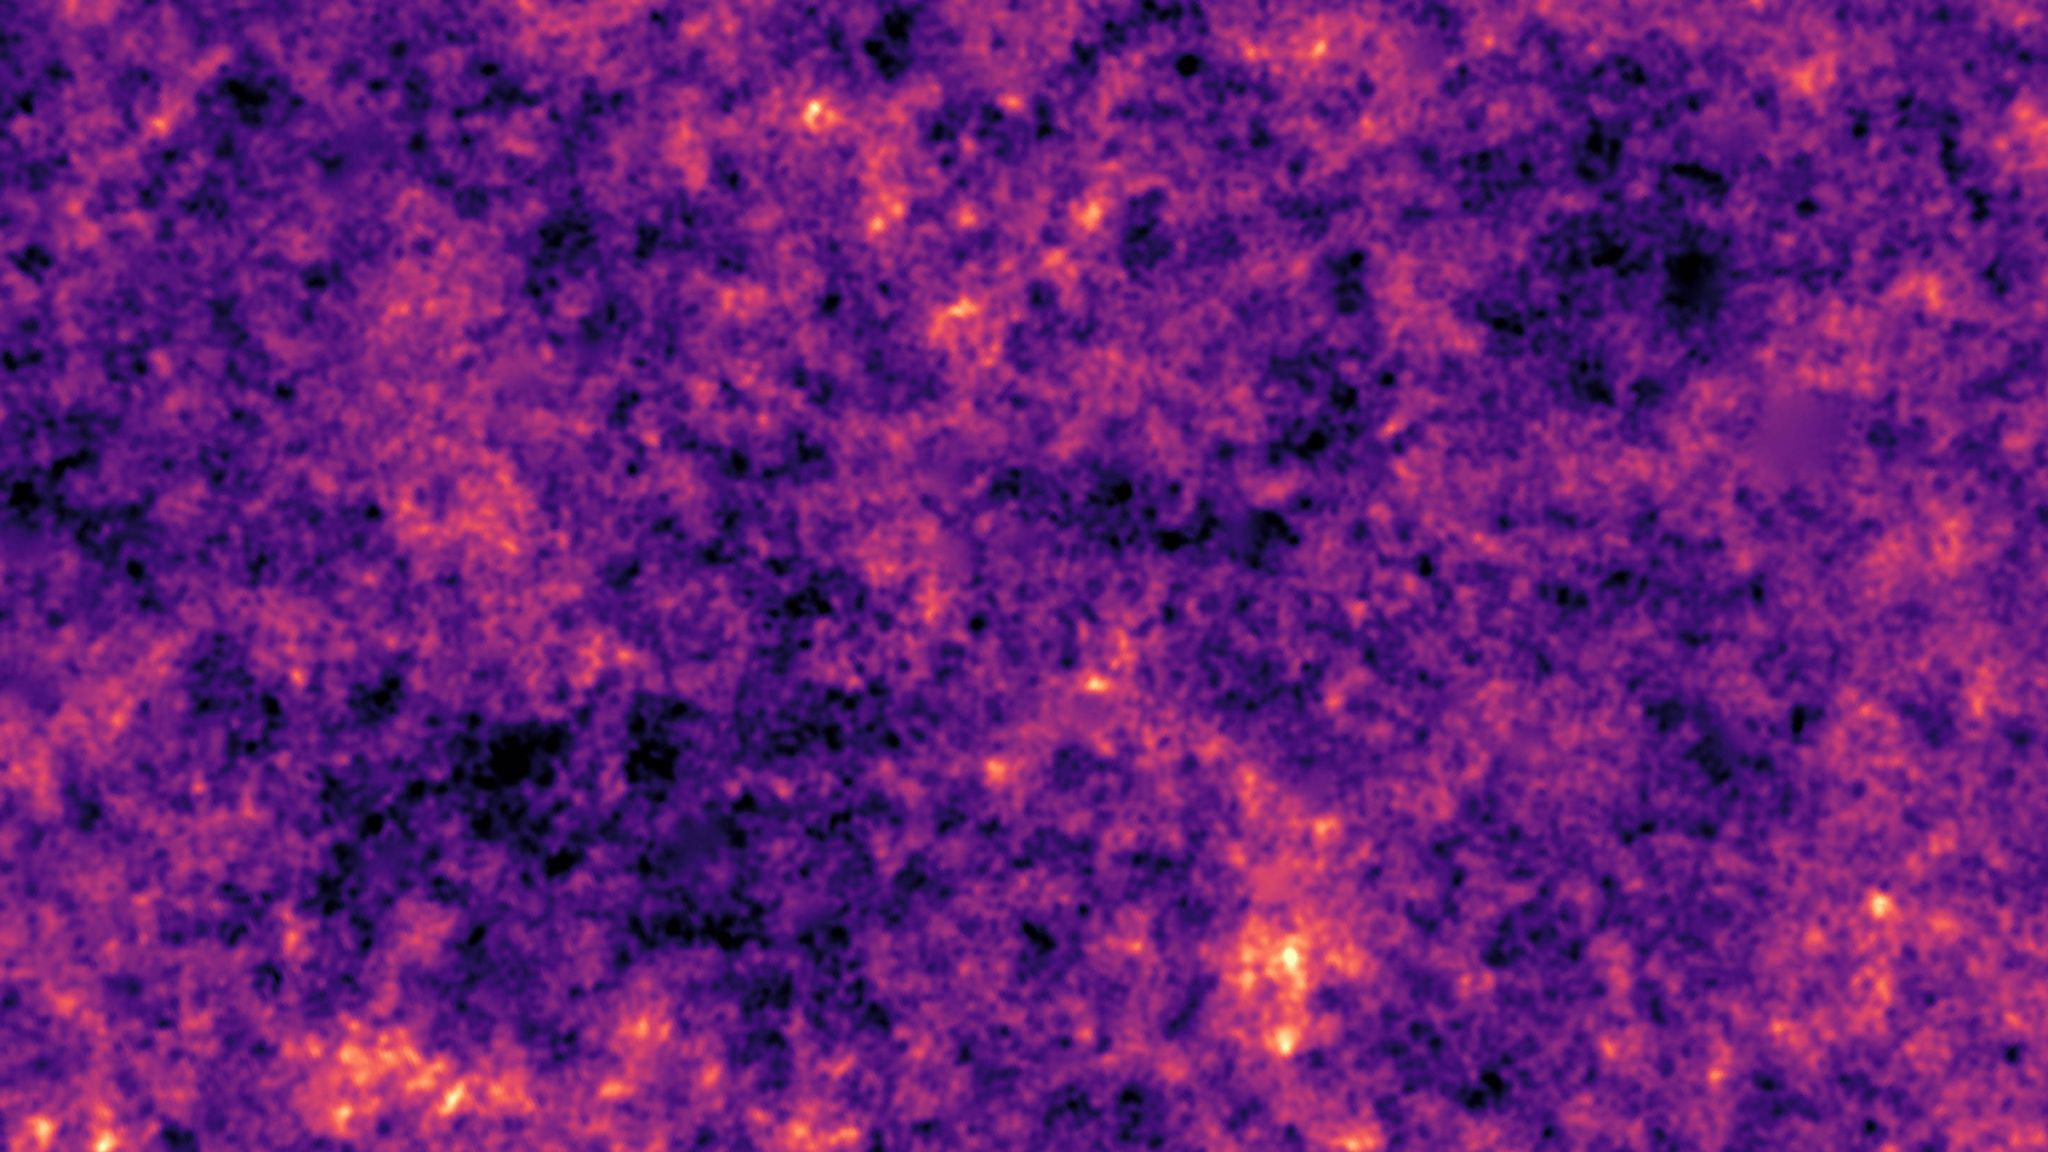 Dark Matter Space Wallpapers